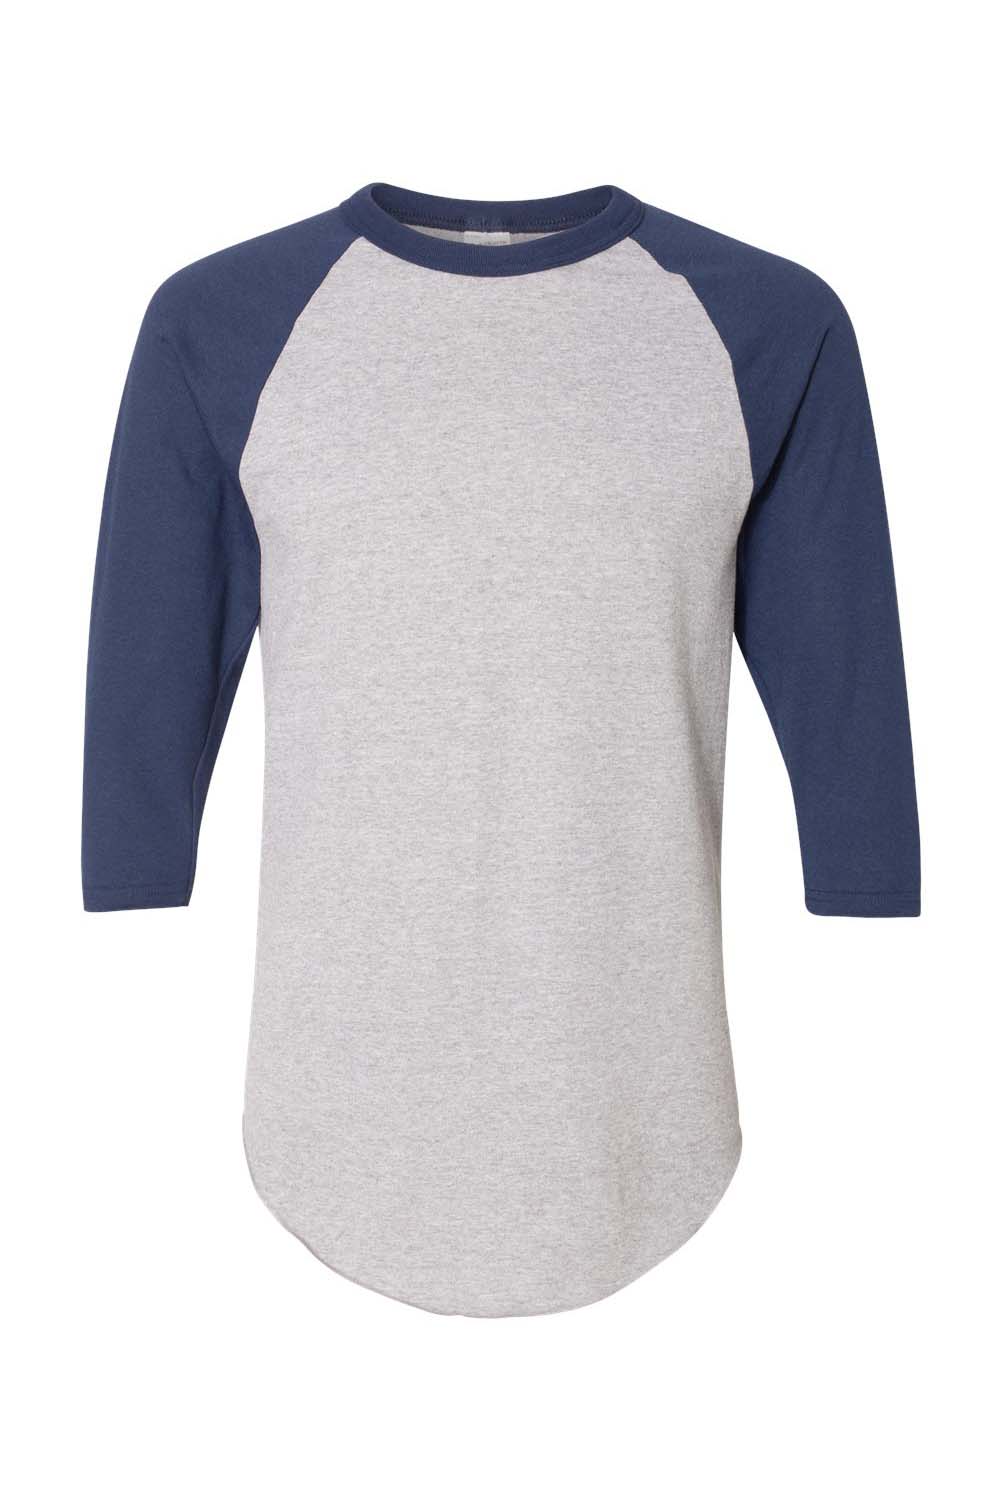 Augusta Sportswear AG4420/4420 Mens 3/4 Sleeve Crewneck T-Shirt Heather Grey/Navy Blue Model Flat Front